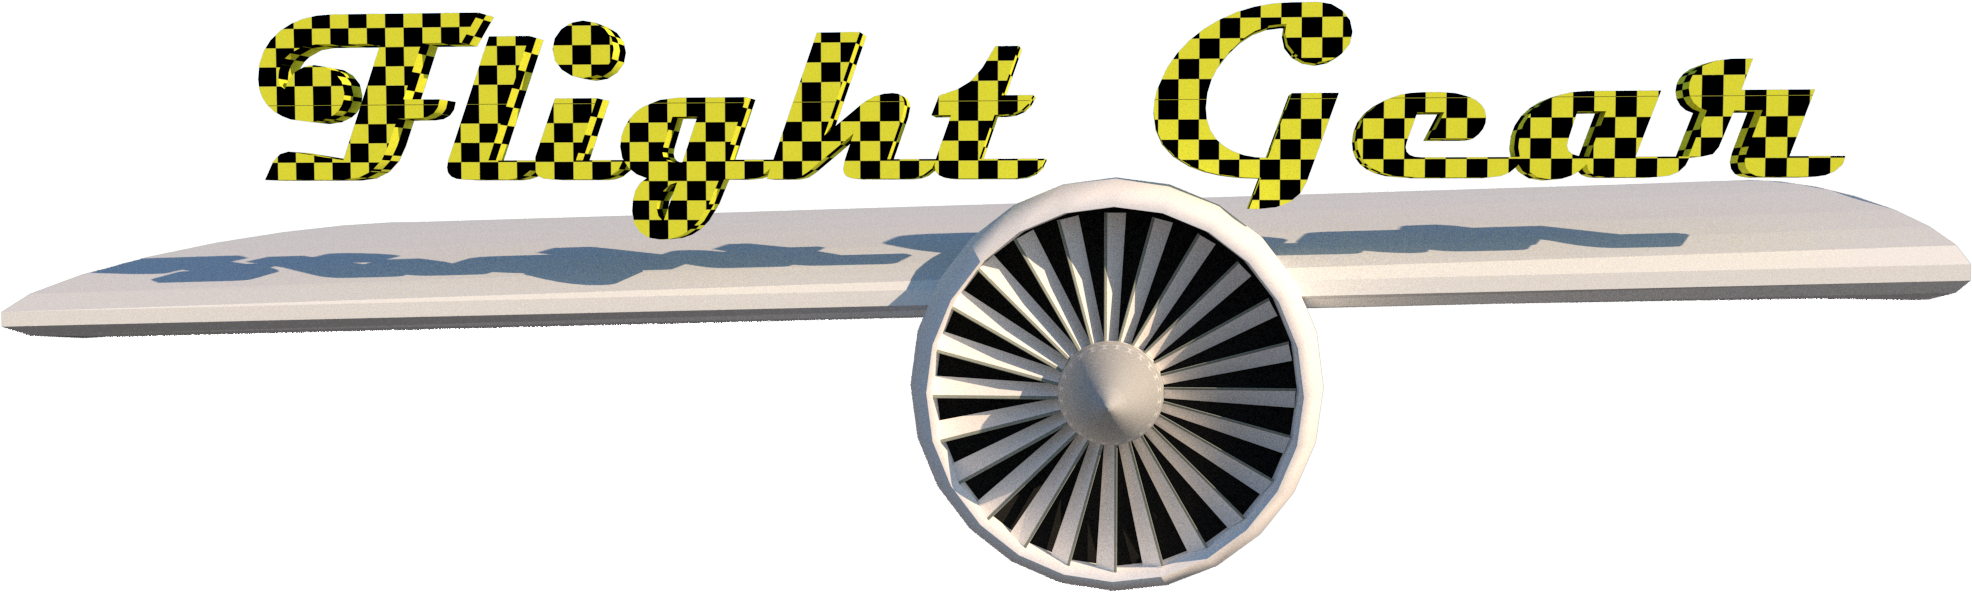 Flight Gear3 D Logo PNG image